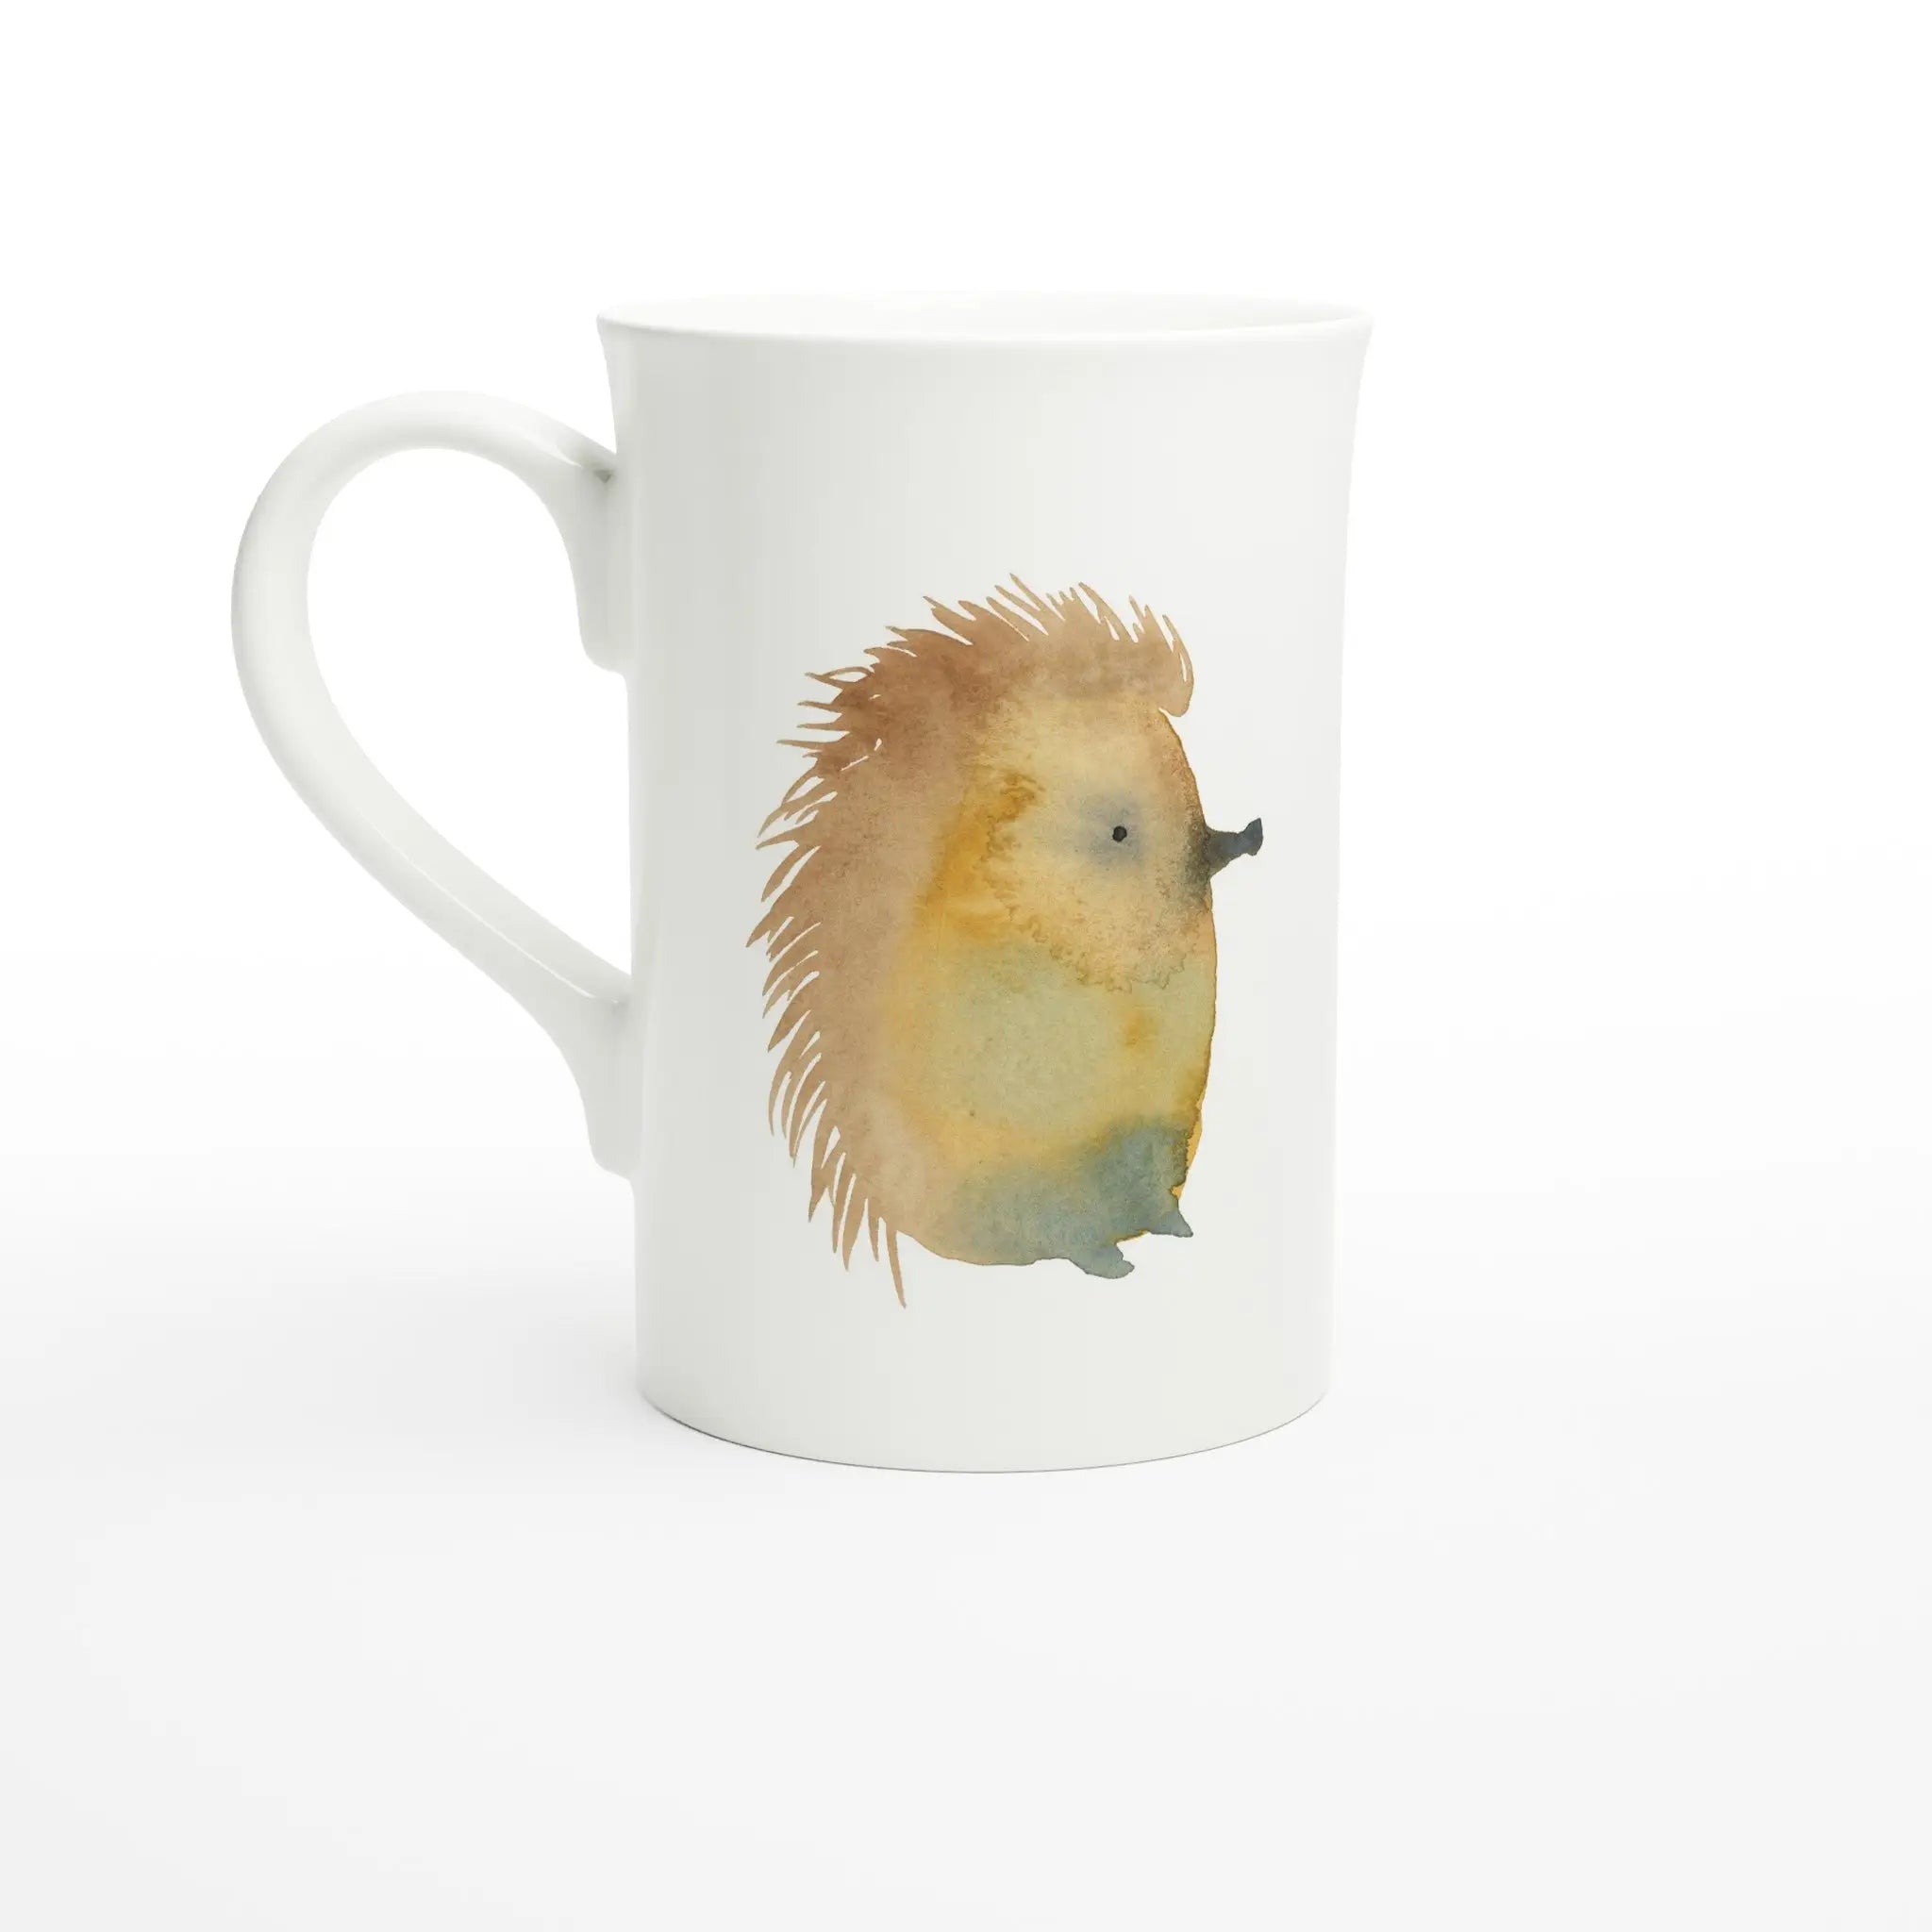 Porcelain Mug with Hedgehog design, perfect for tea or coffee enthusiasts